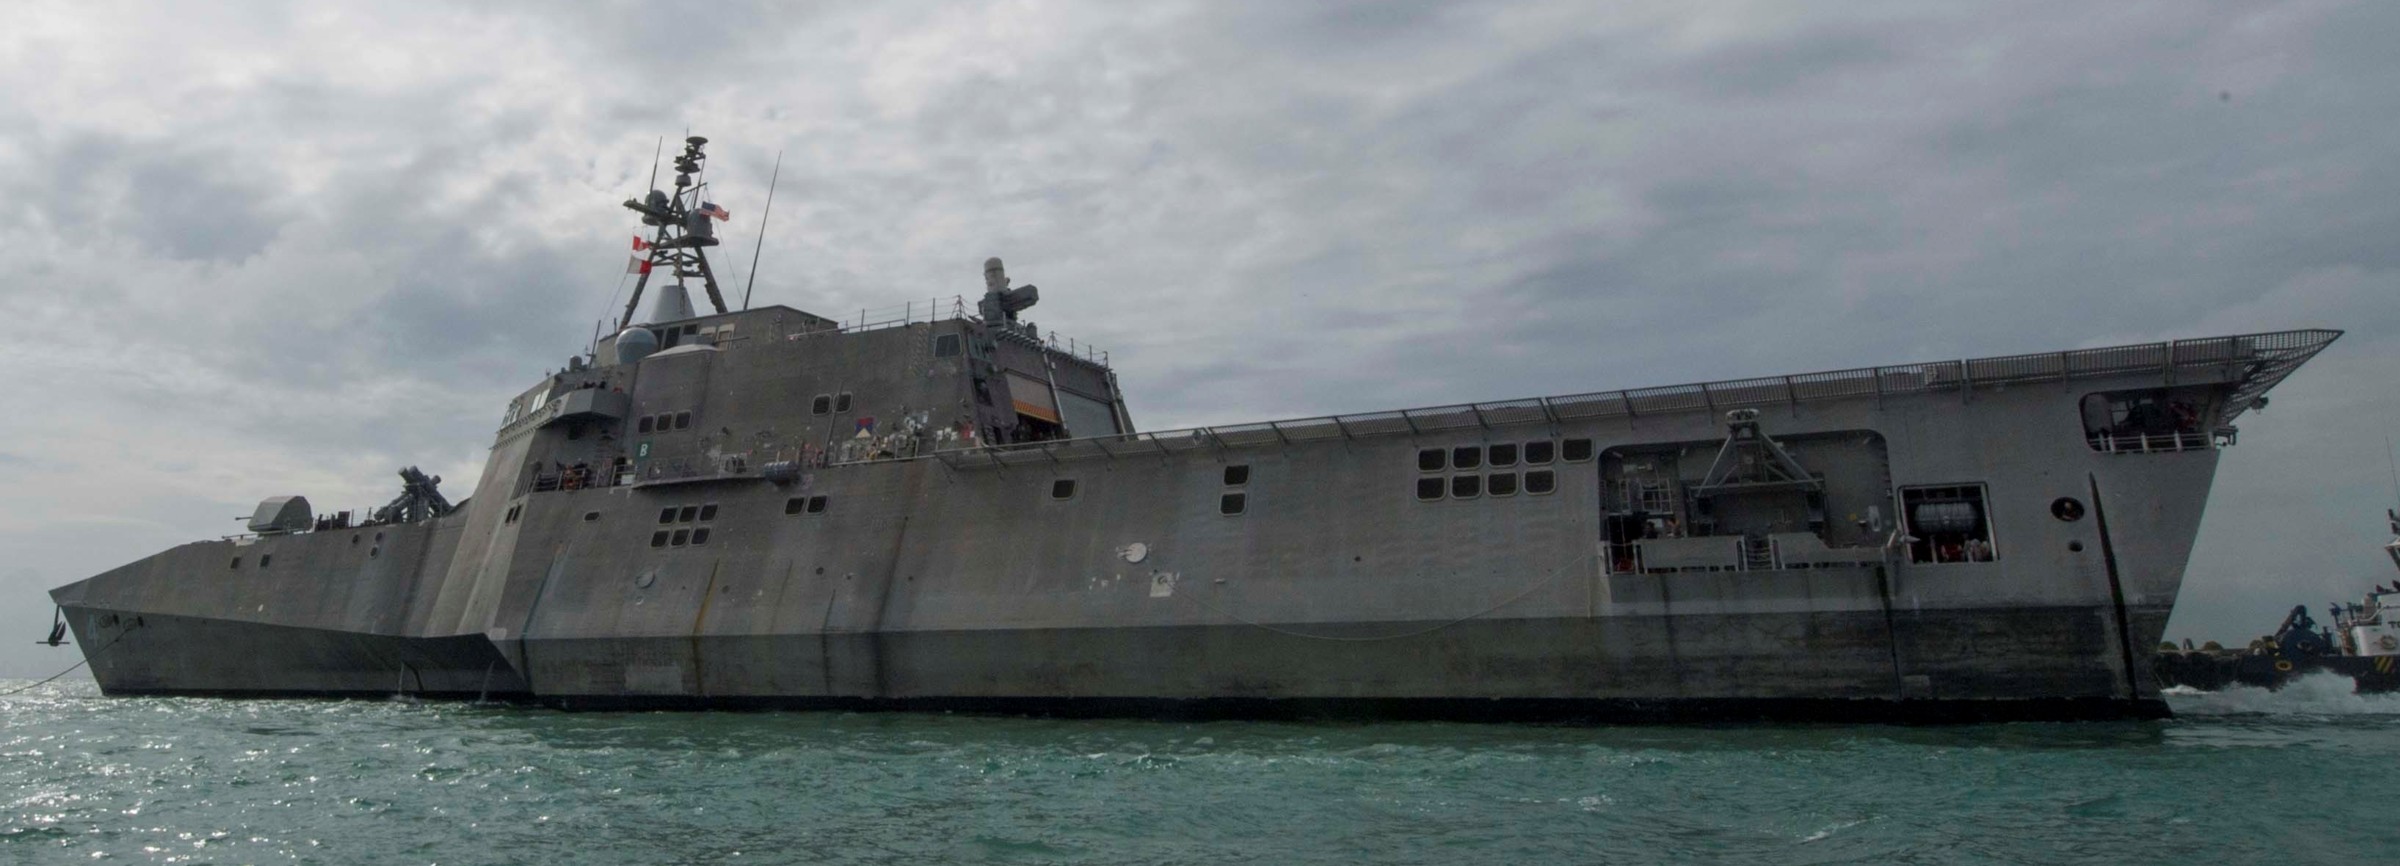 lcs-4 uss coronado independence class littoral combat ship us navy 44